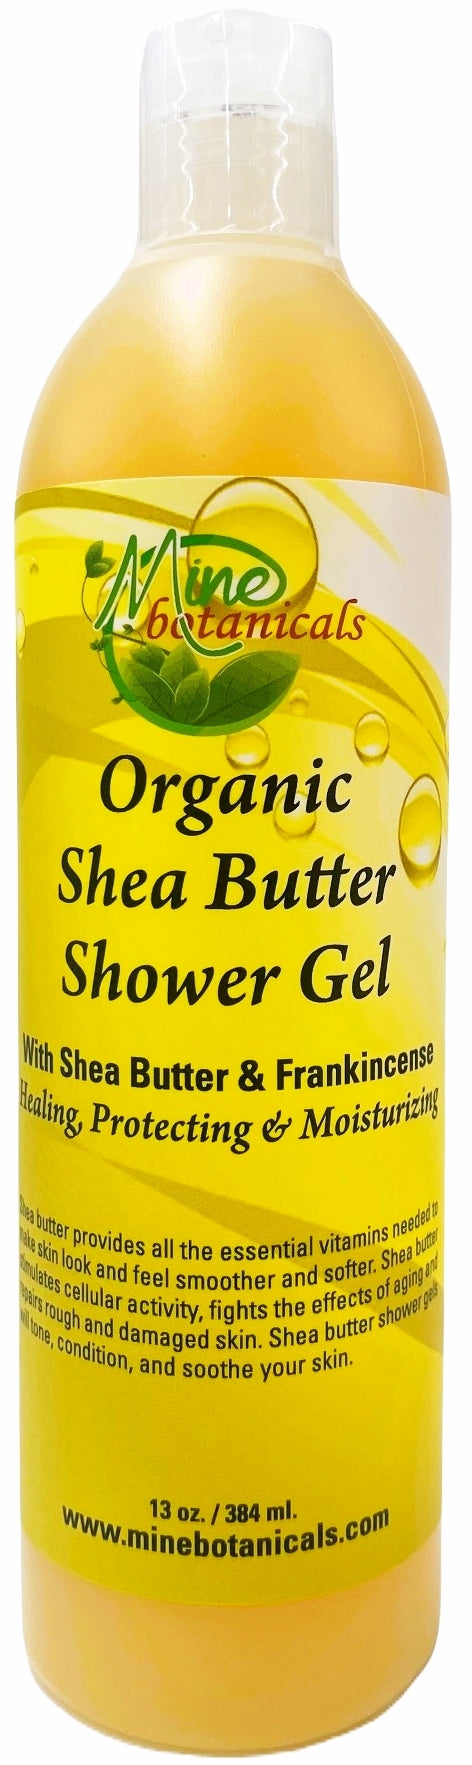 Organic Shea Butter Shower Gel